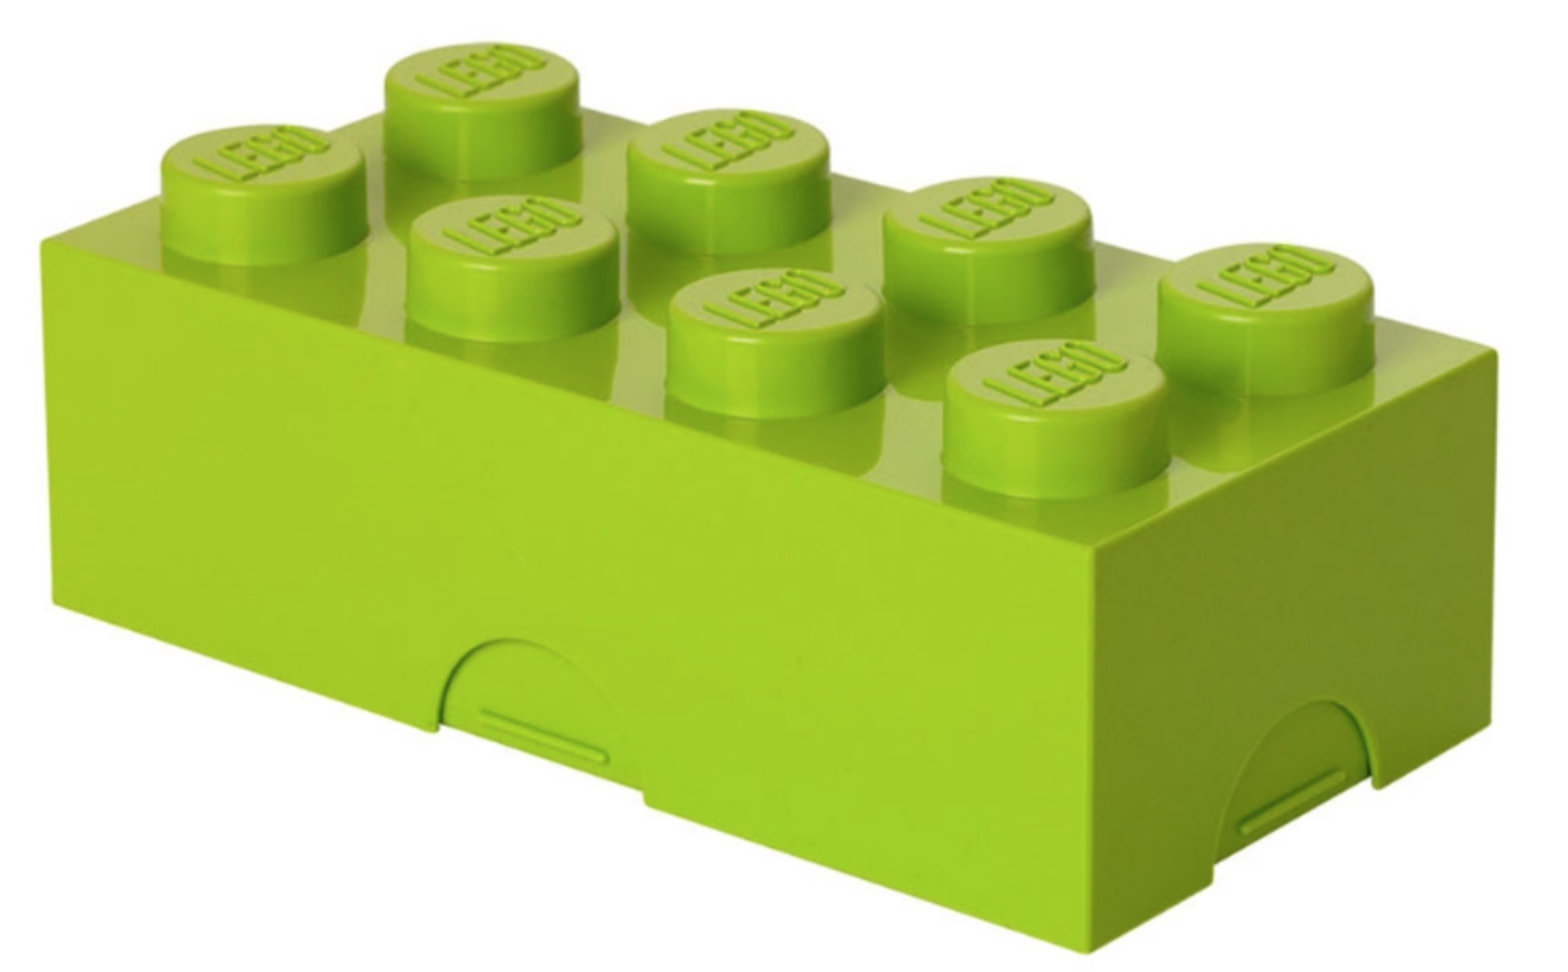 Smitsom sygdom nikkel tæmme Lego madkasse - Klar til skolestart